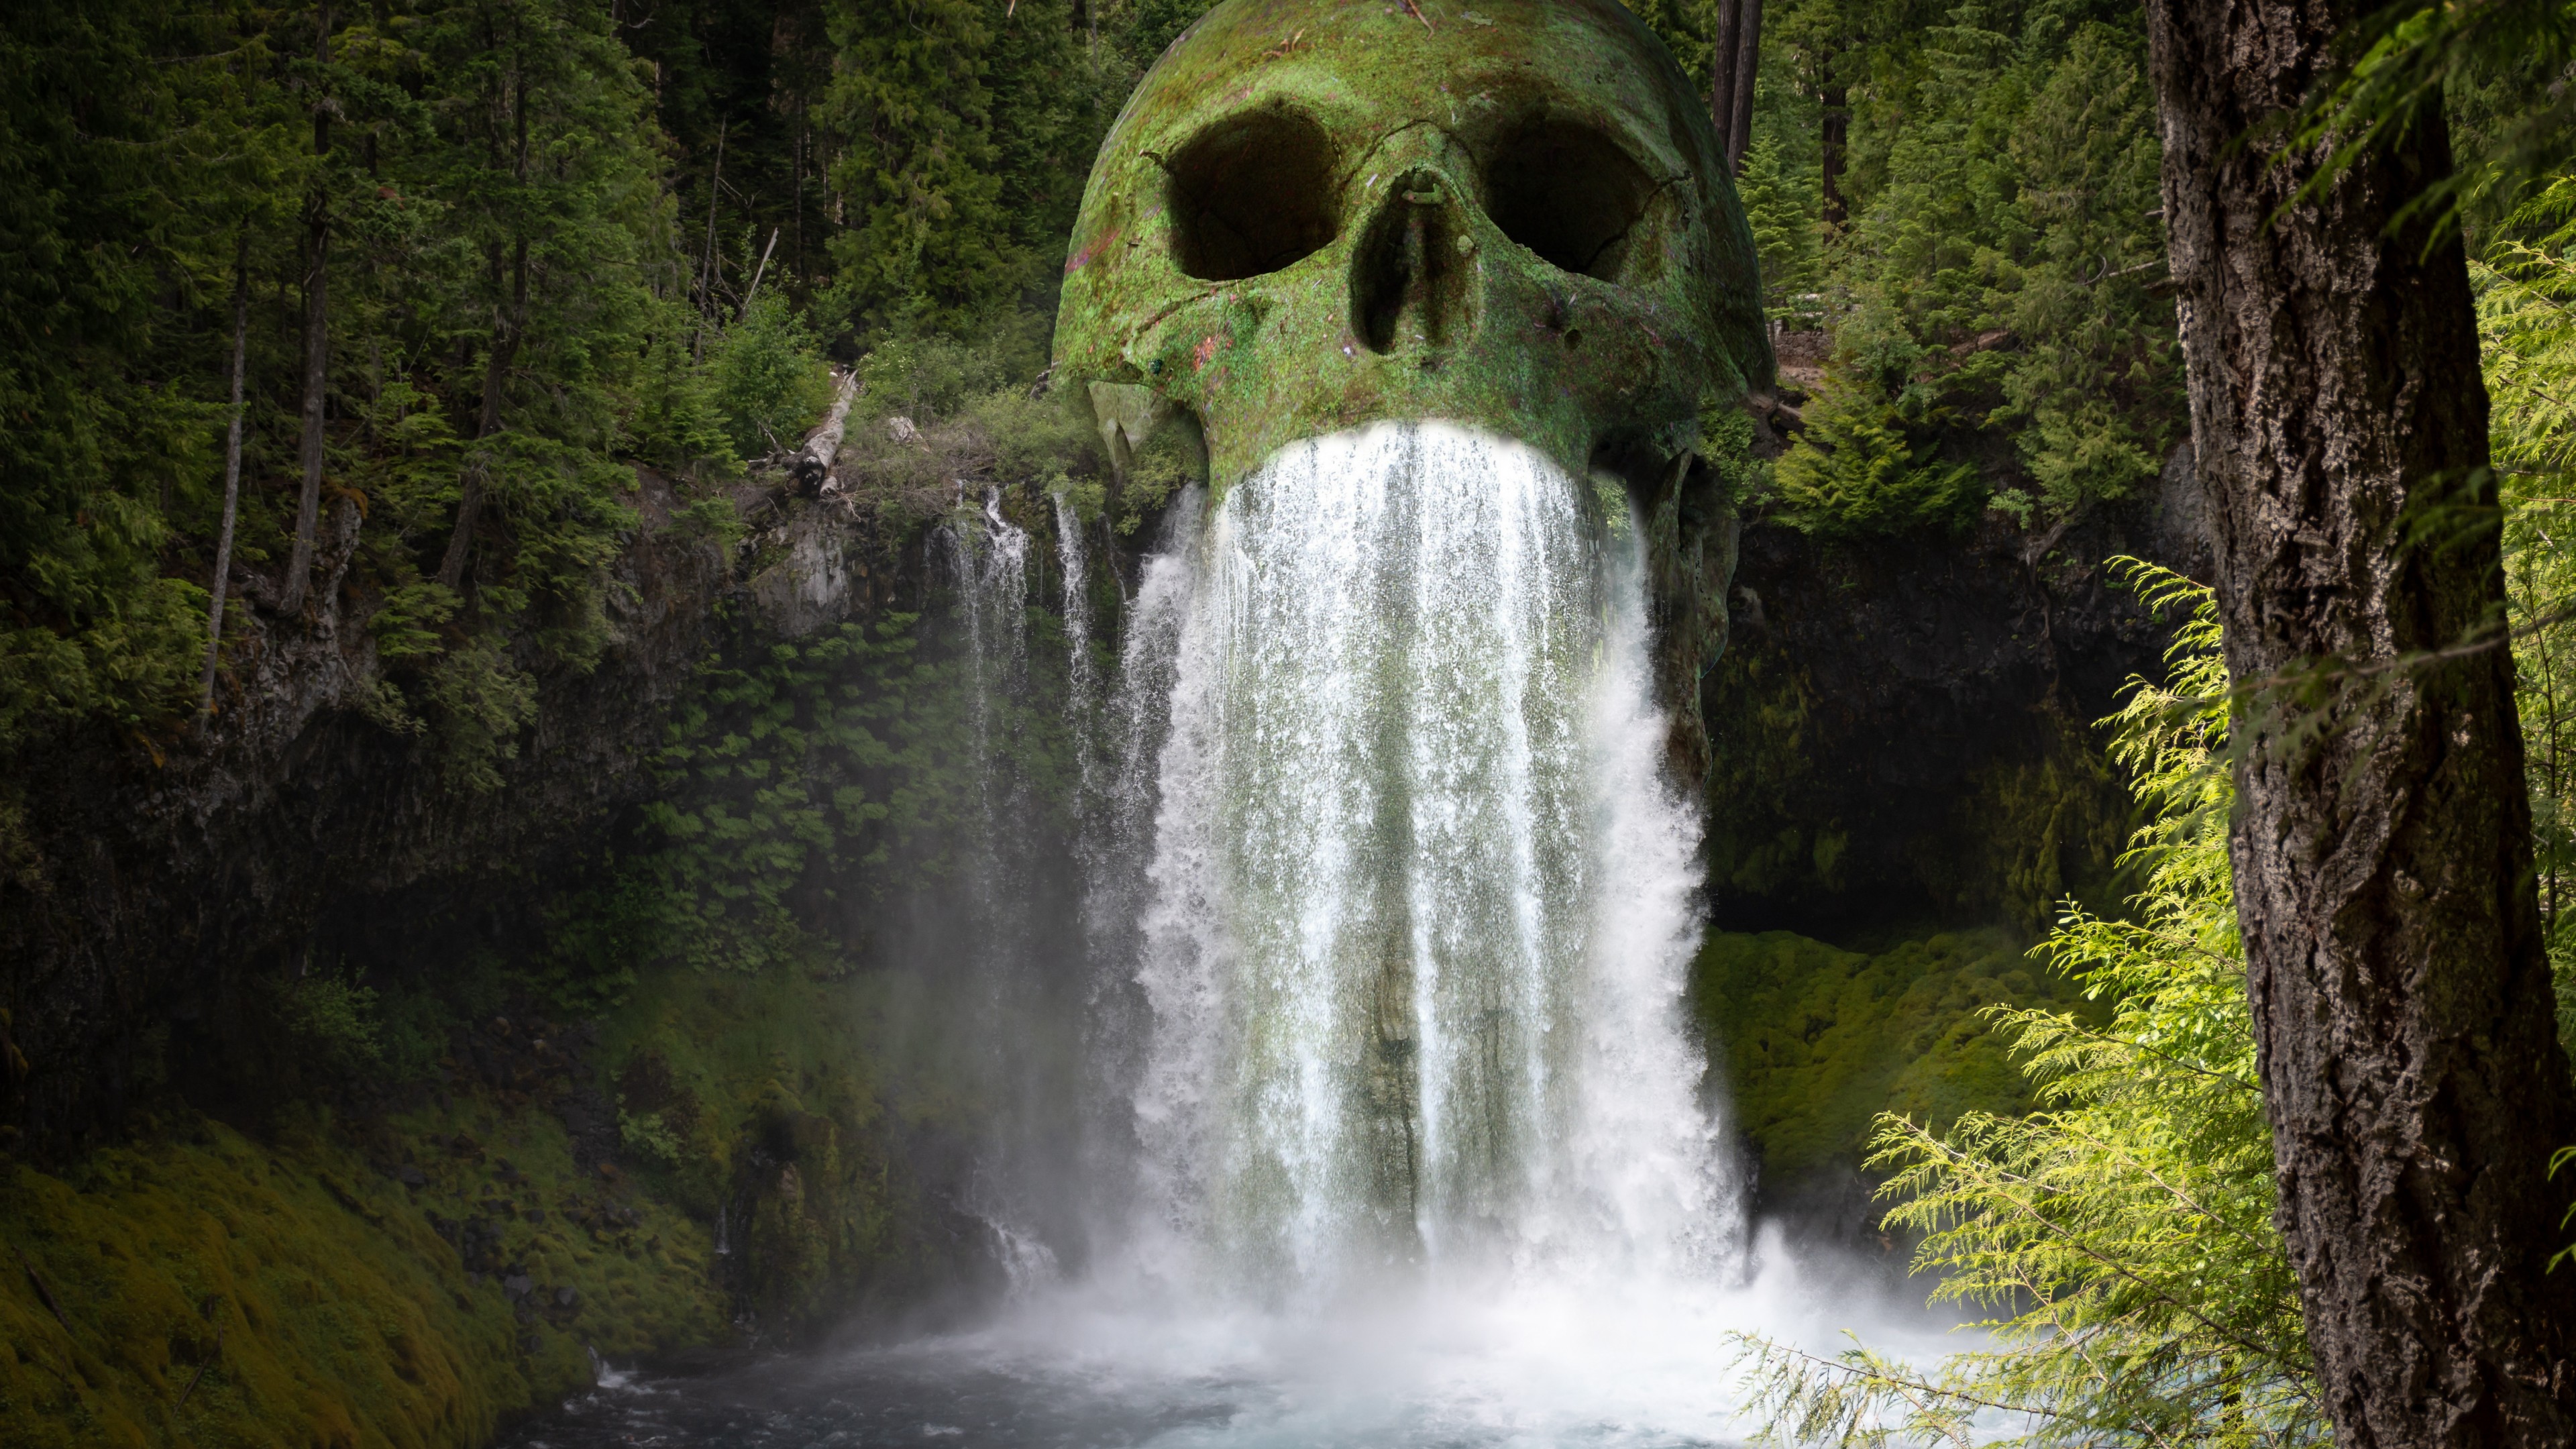 General 3840x2160 skull waterfall nature water green forest creepy surreal digital art